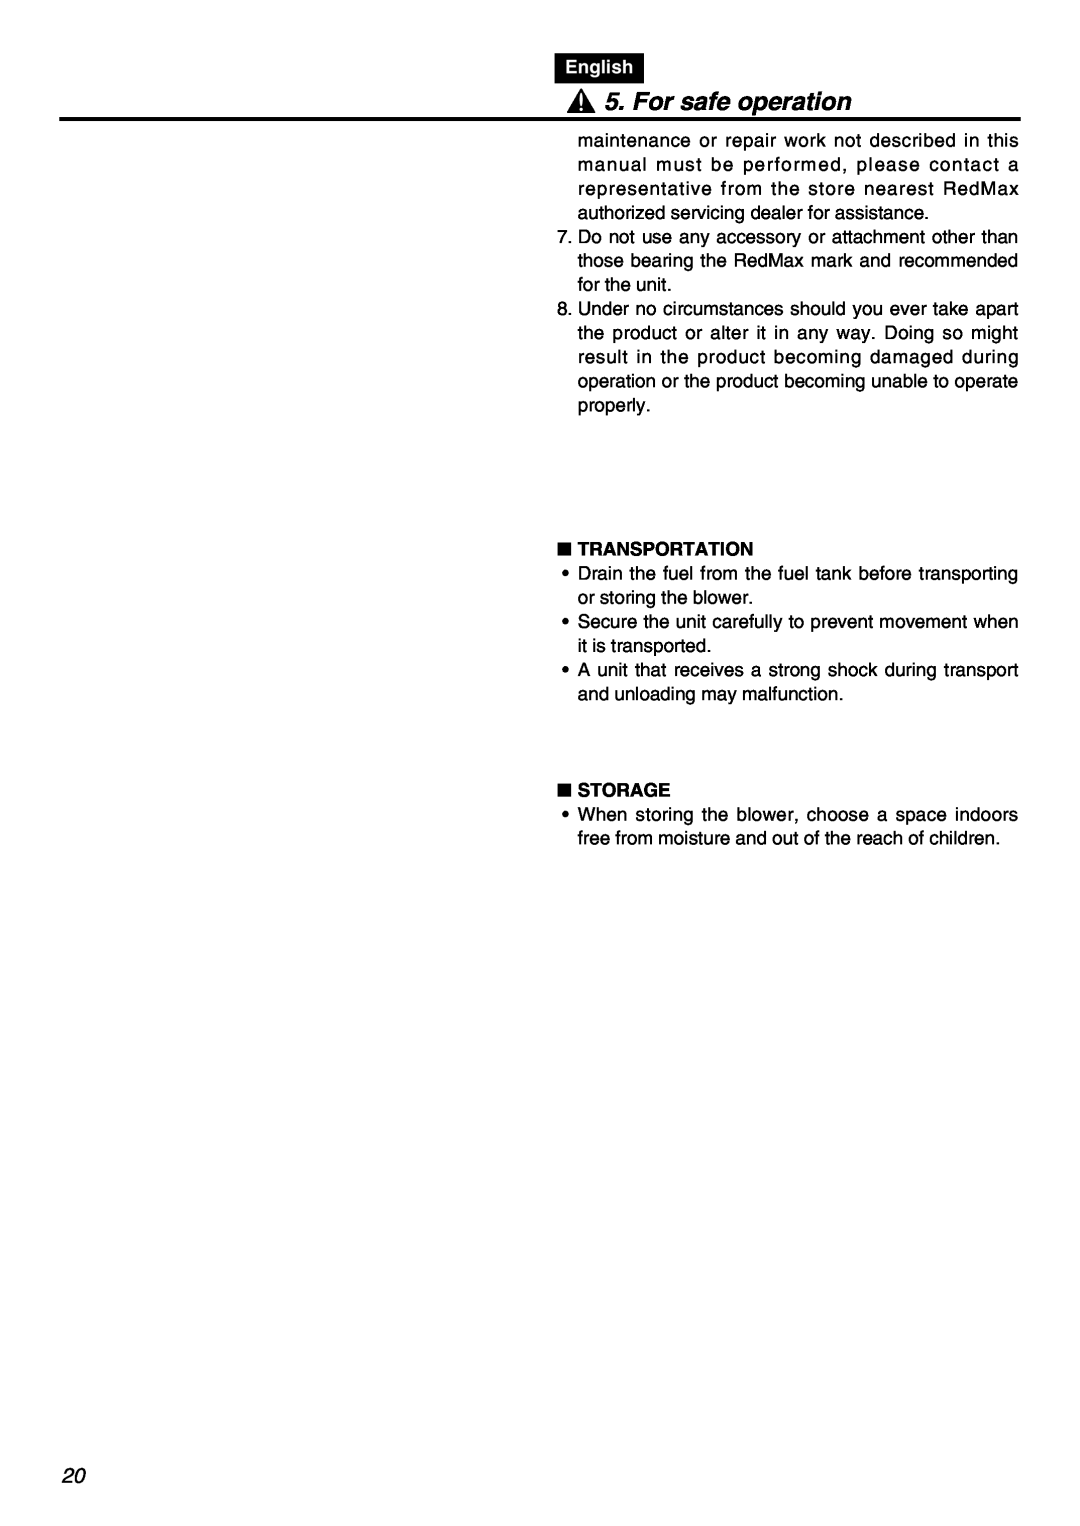 RedMax EBZ7001RH-CA, EBZ7001-CA manual For safe operation, English, Transportation, Storage 